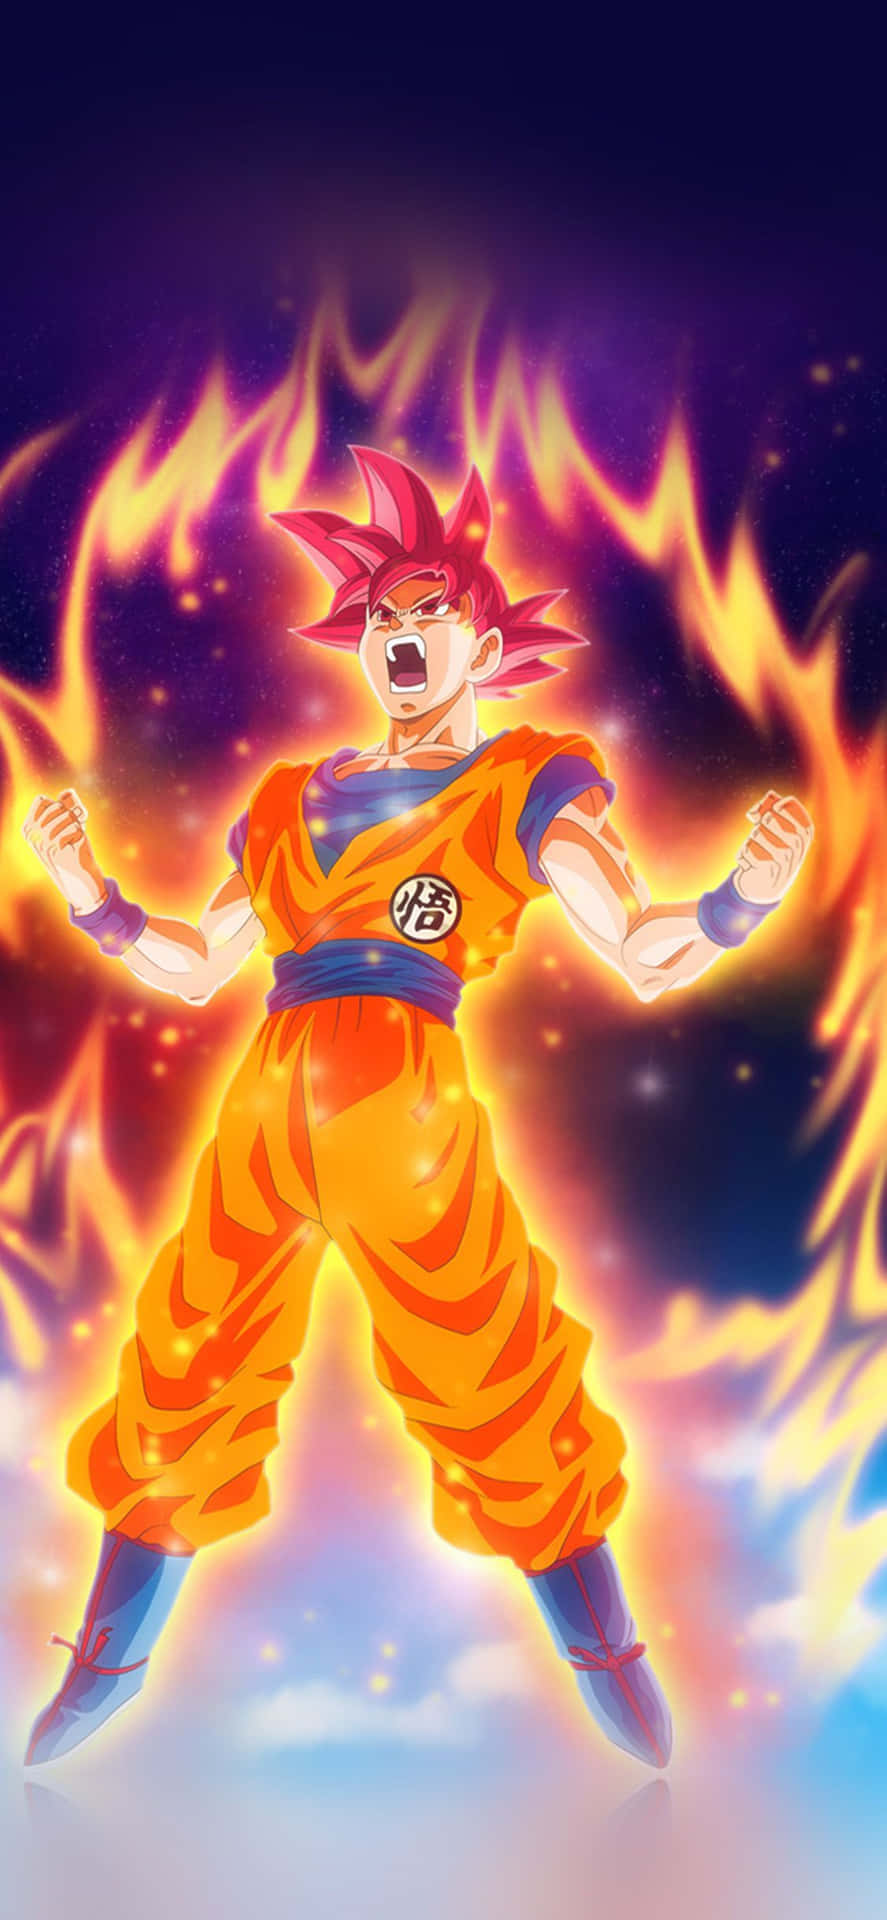 Super Saiyan God Goku Dragon Ball Super iPhone Wallpaper